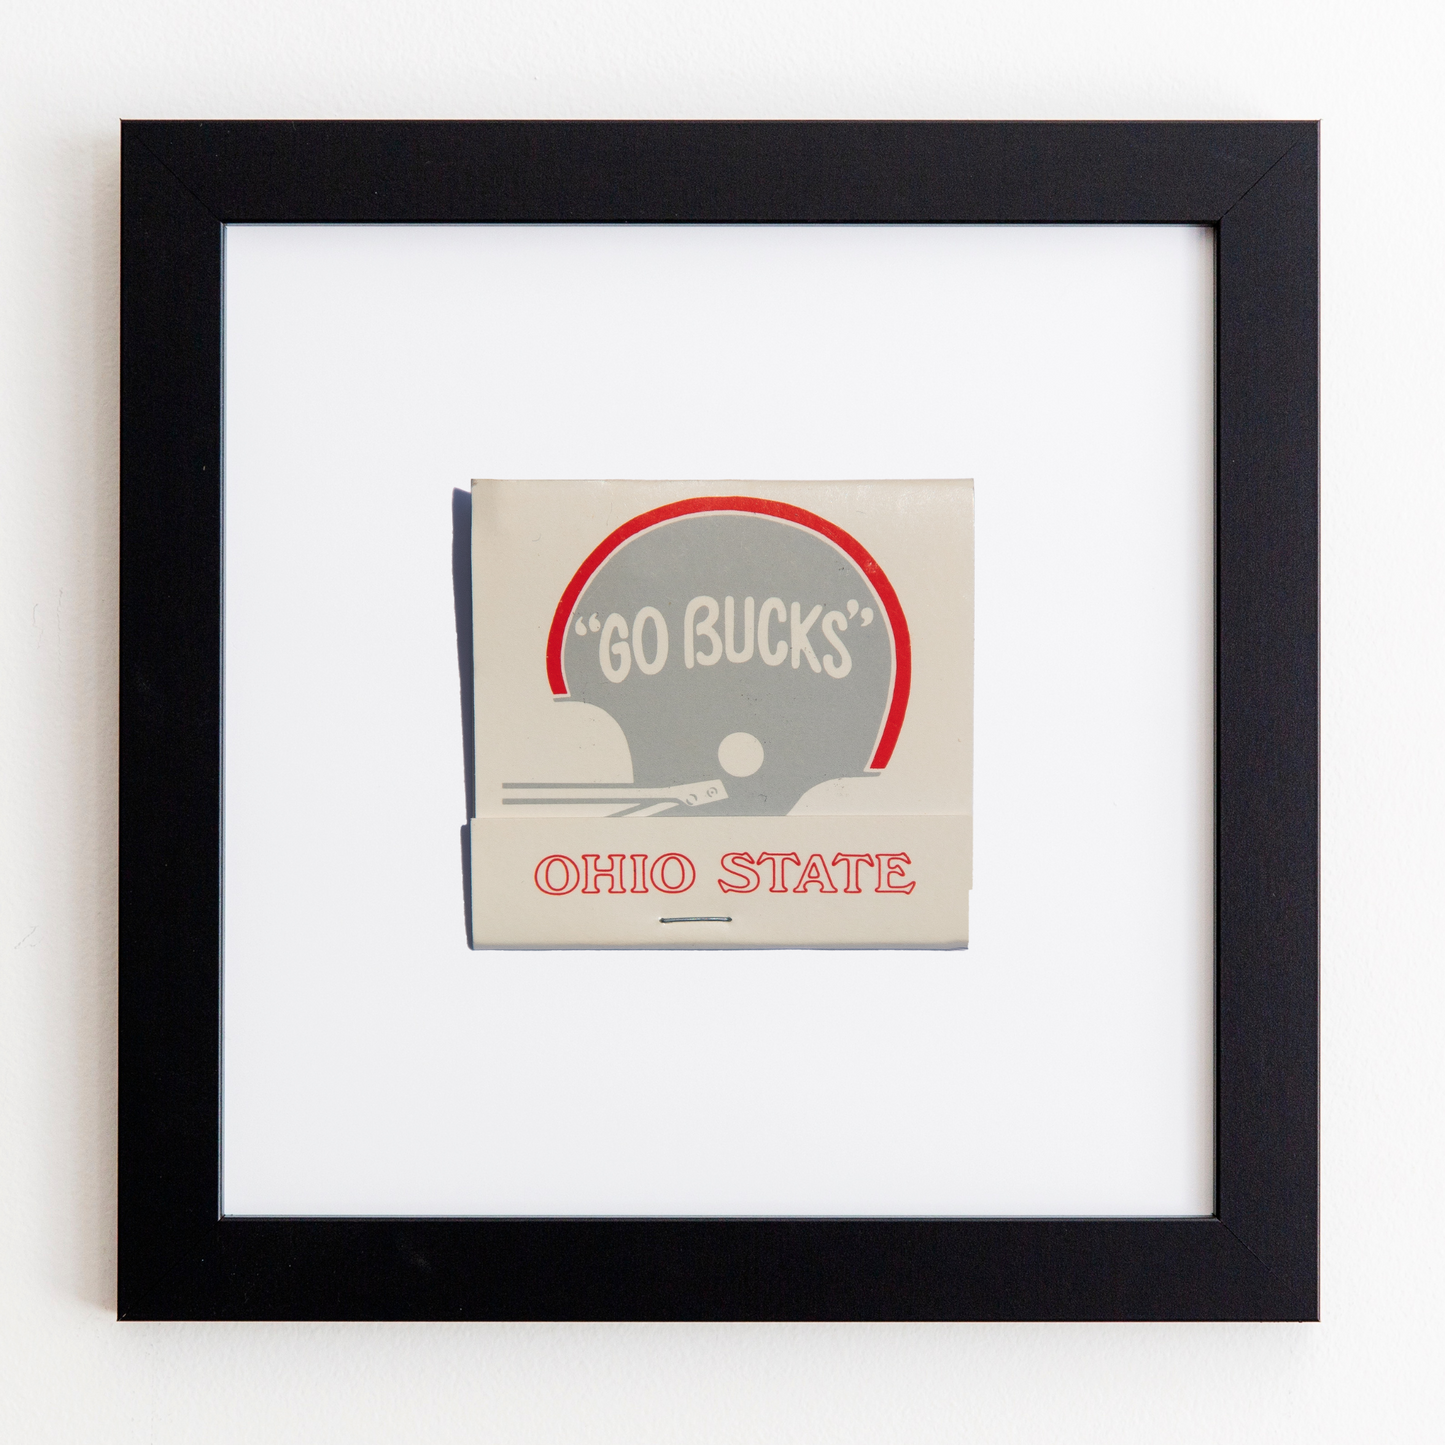 Ohio State (Go Bucks)